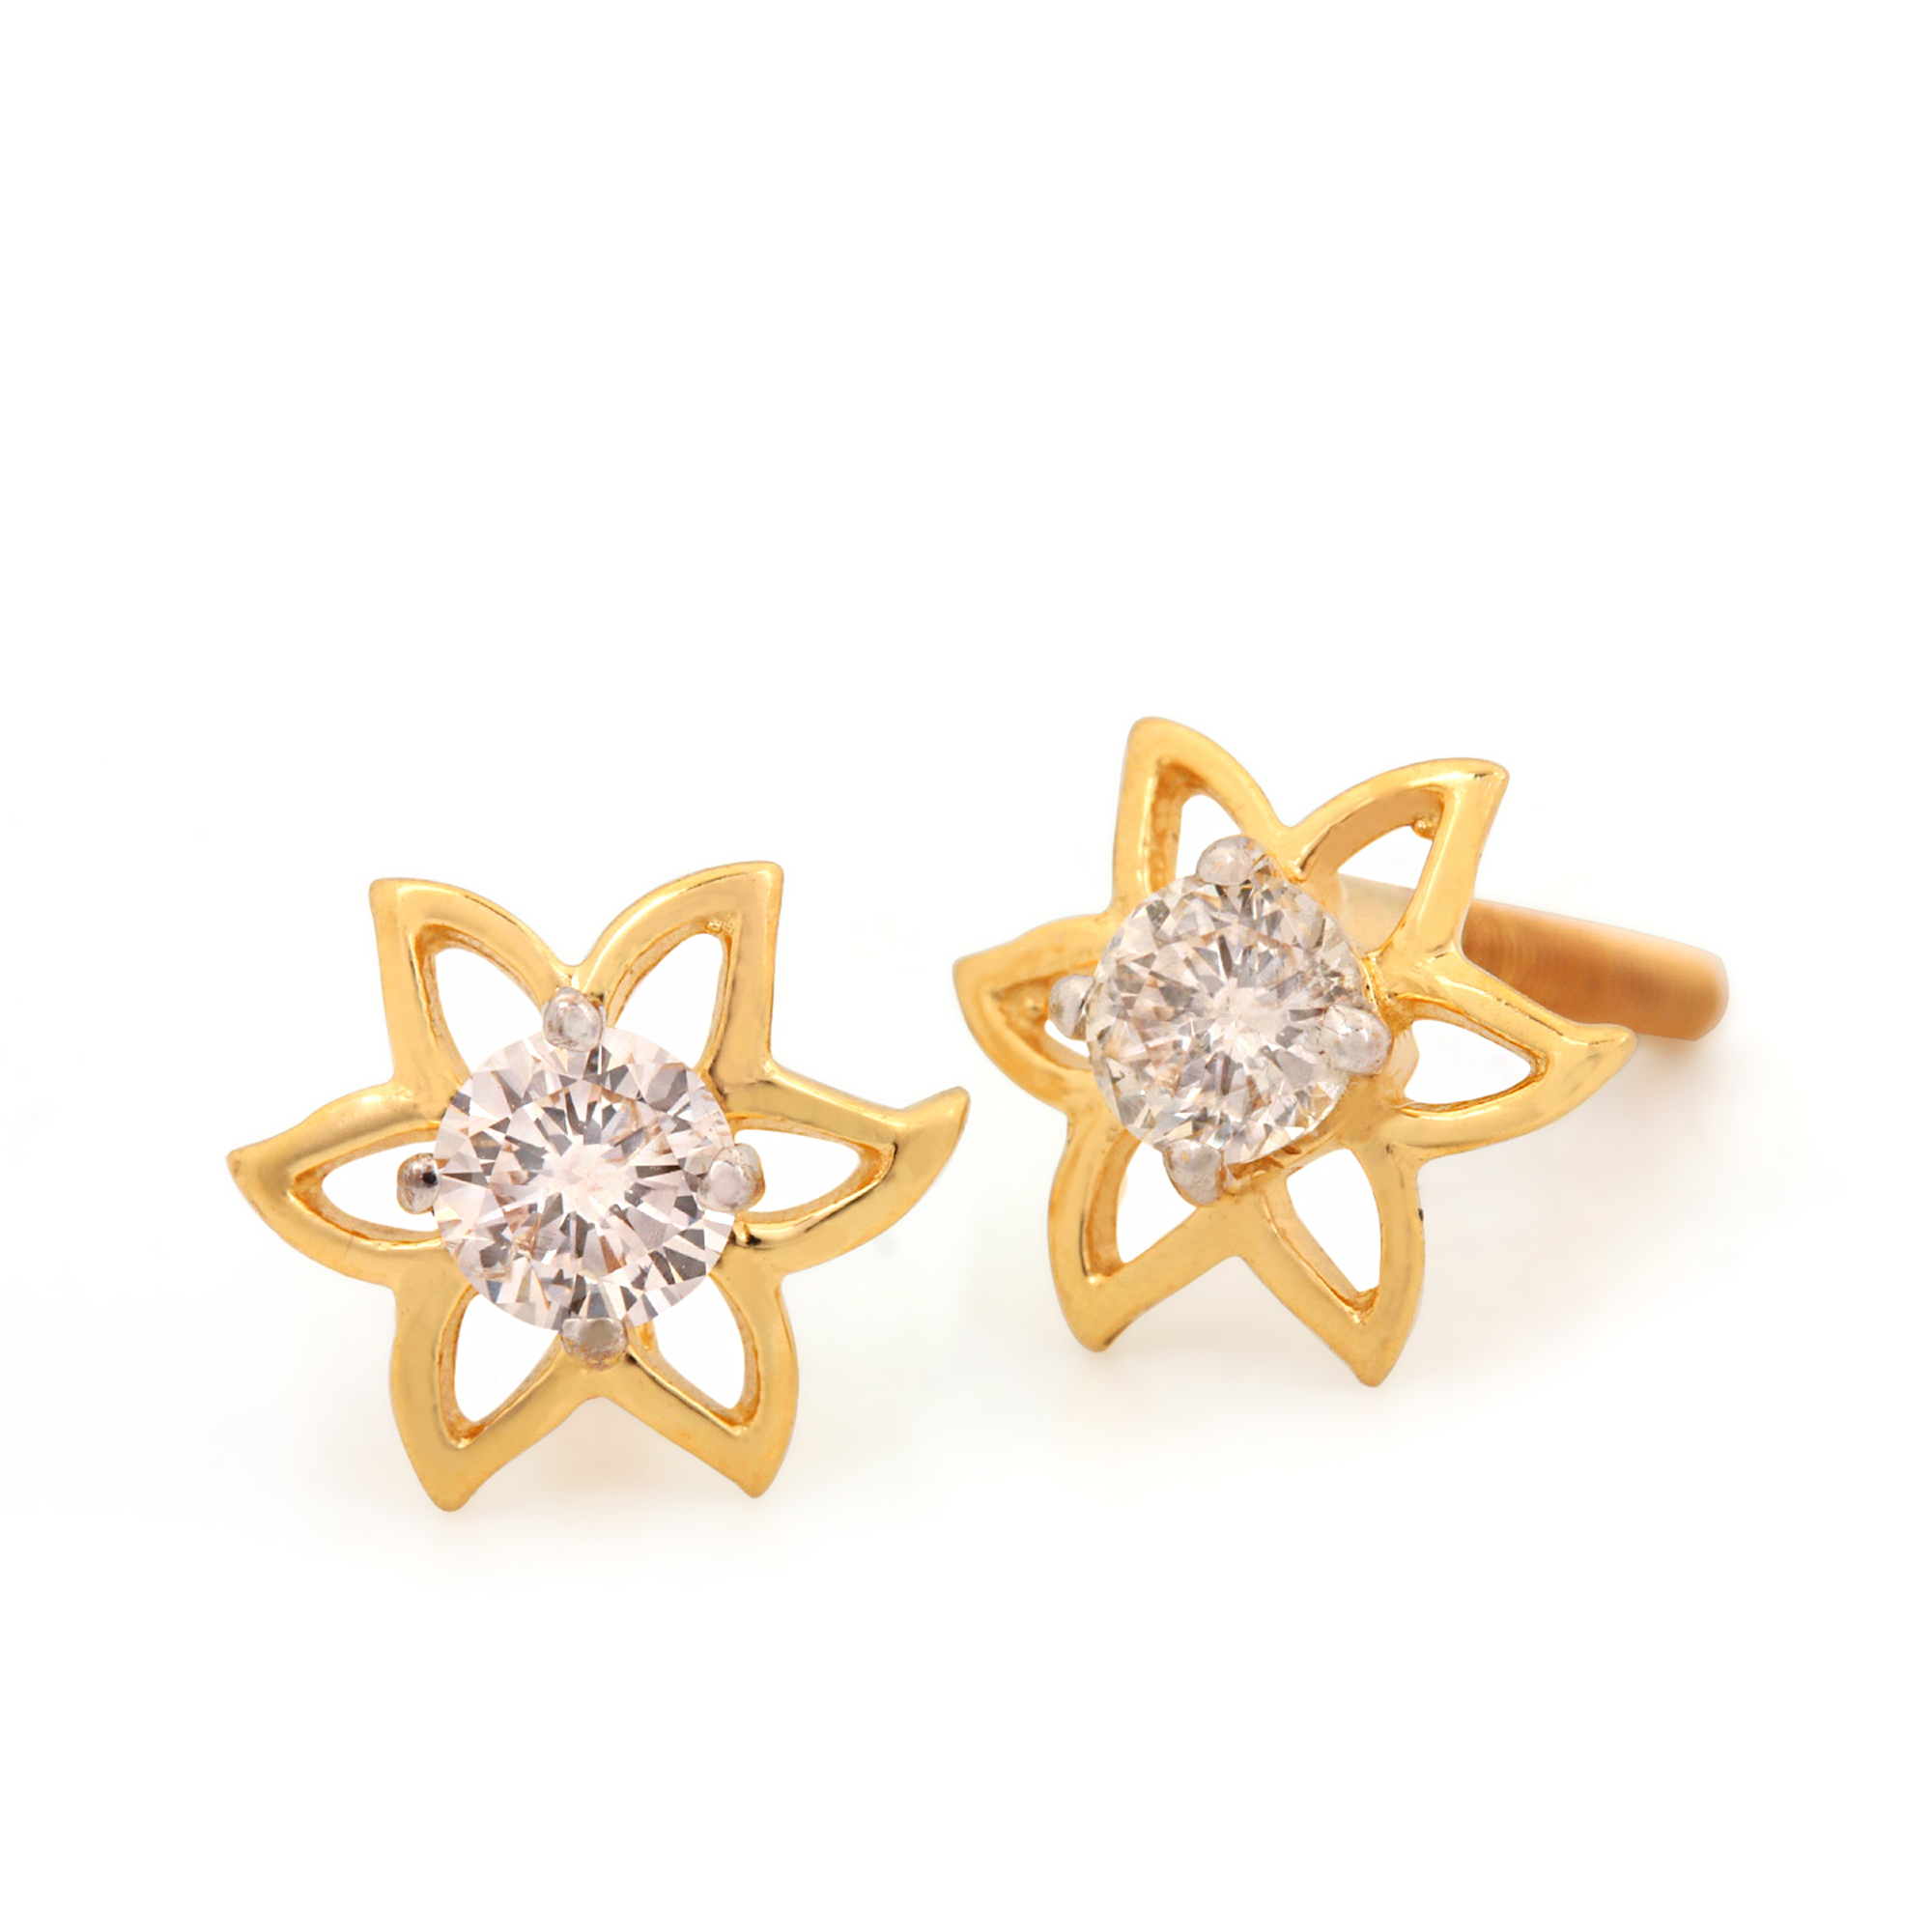 Flower Faceted Earrings Gold Diamond Jewelry